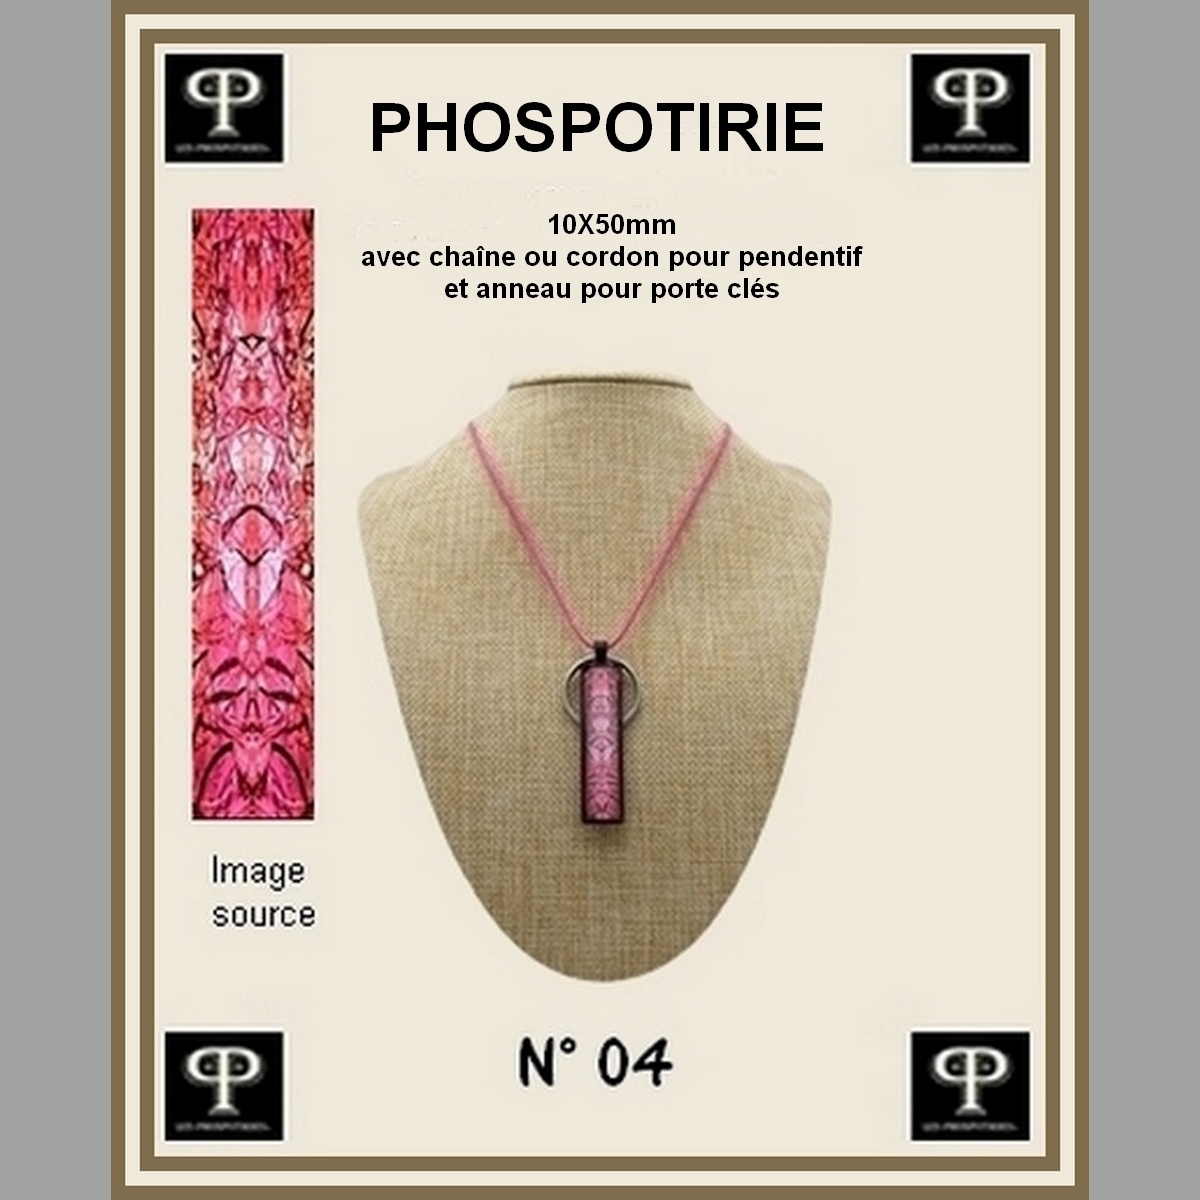 Phospotirie version TOTEM 10X50 mm N°04 pour pendentifs ou porte-clés